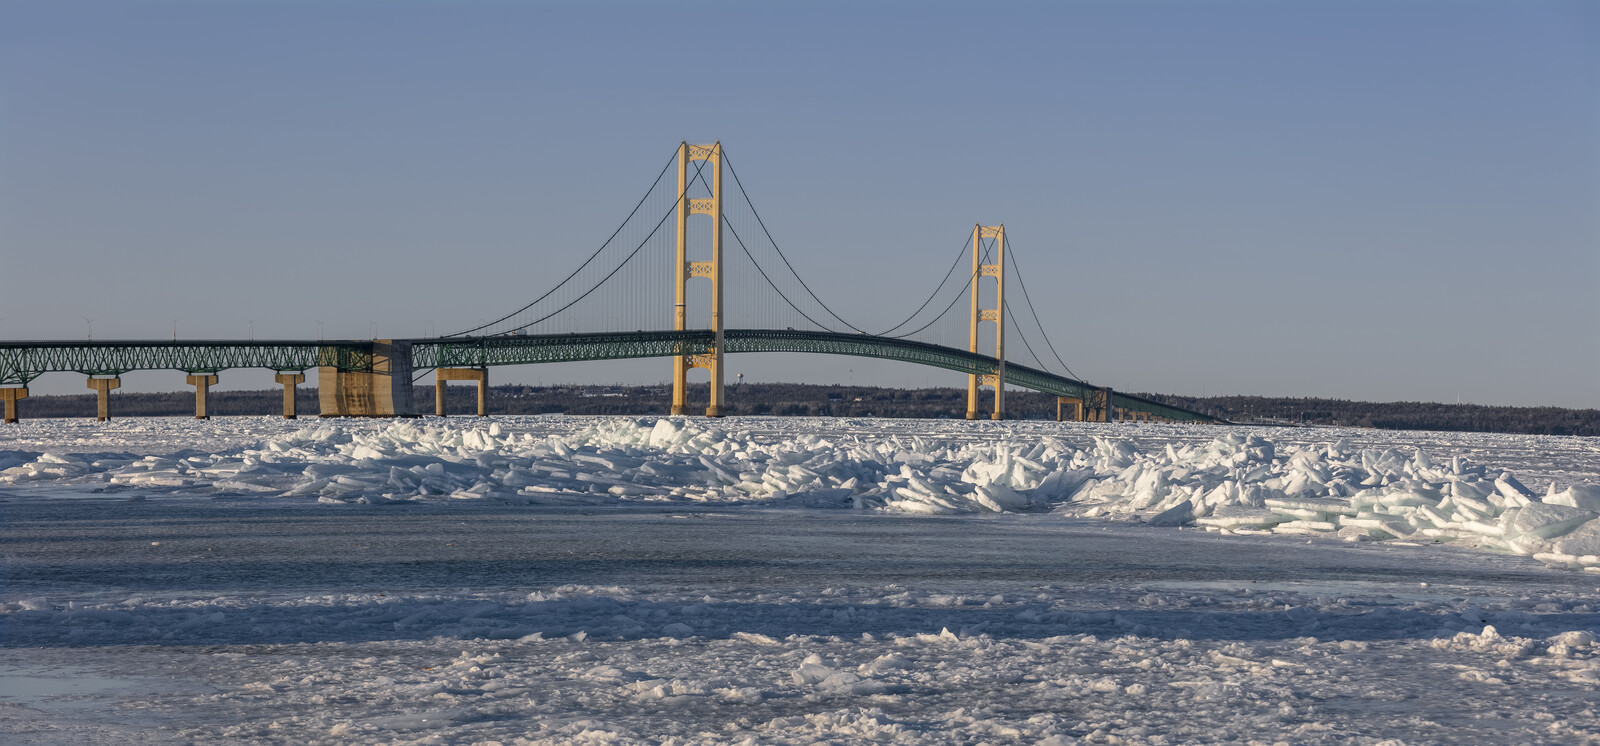 Mackinac Bridge spanning a frozen Straits of Mackinac in Michigan.